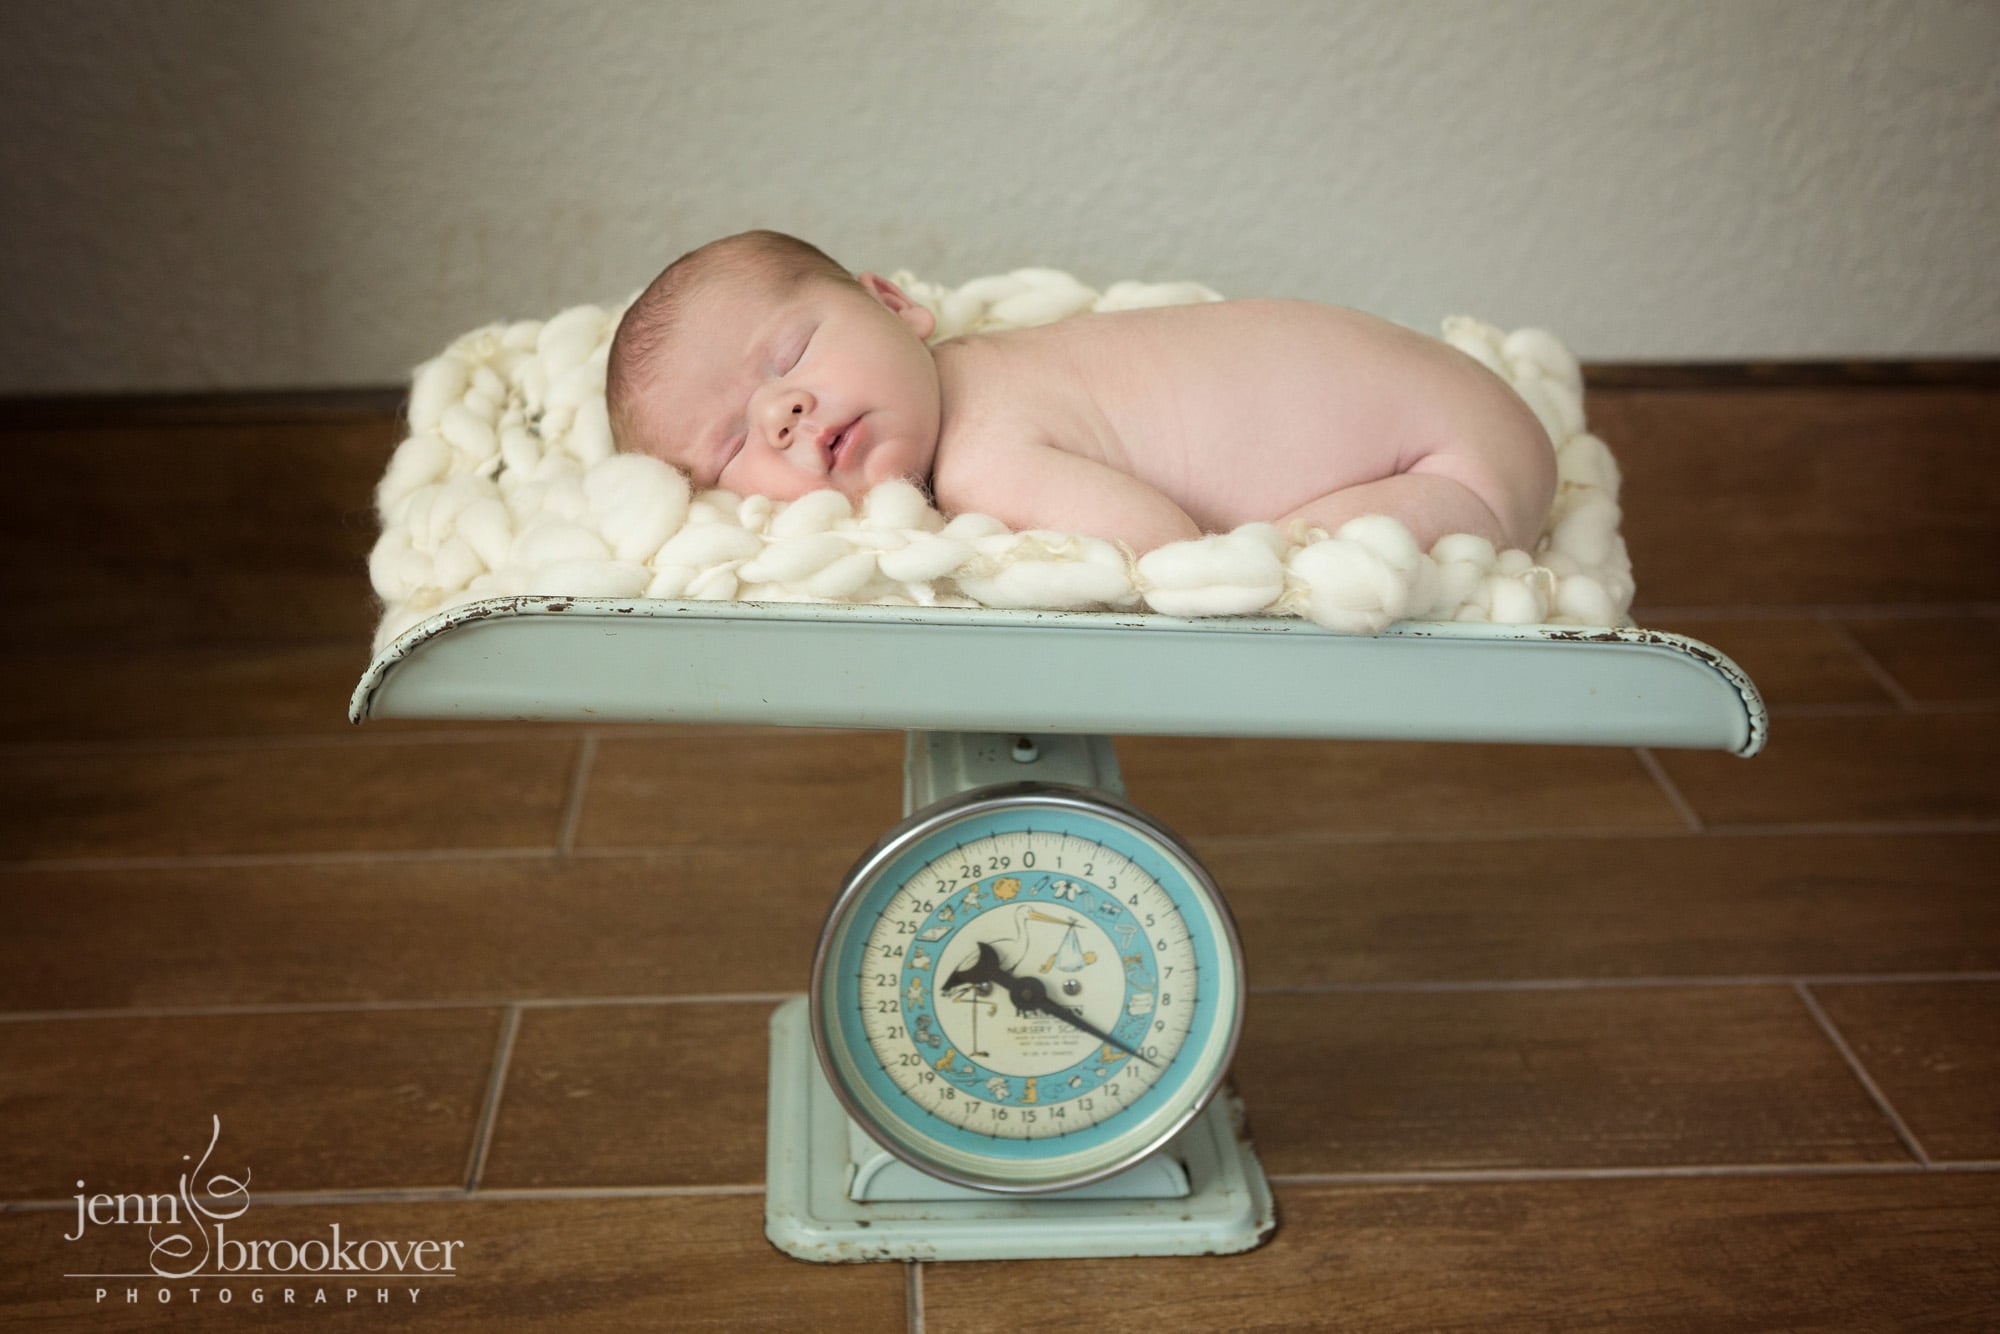 newborn asleep on vintage scale during newborn photo session